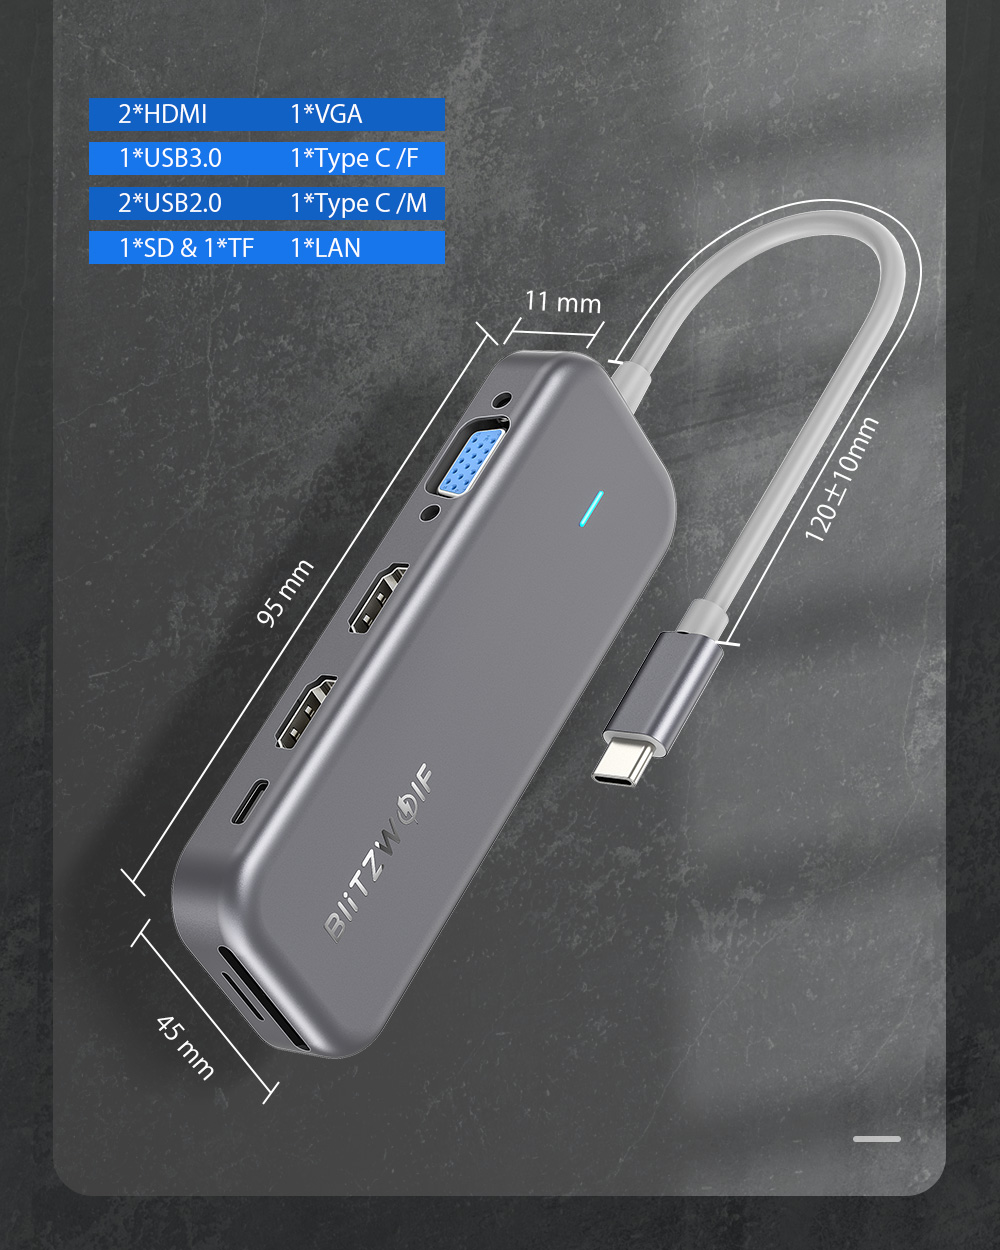 BlitzWolf® BW-TH11 11-in-1 USB-C Data Hub with Dual 4K@30Hz HDMI Ports 1080P 60Hz VGA Port USB3.0 USB2.0 1000 Mbps RJ45 LAN SD TF Card Slots Up to 100W Type-C PD Charging